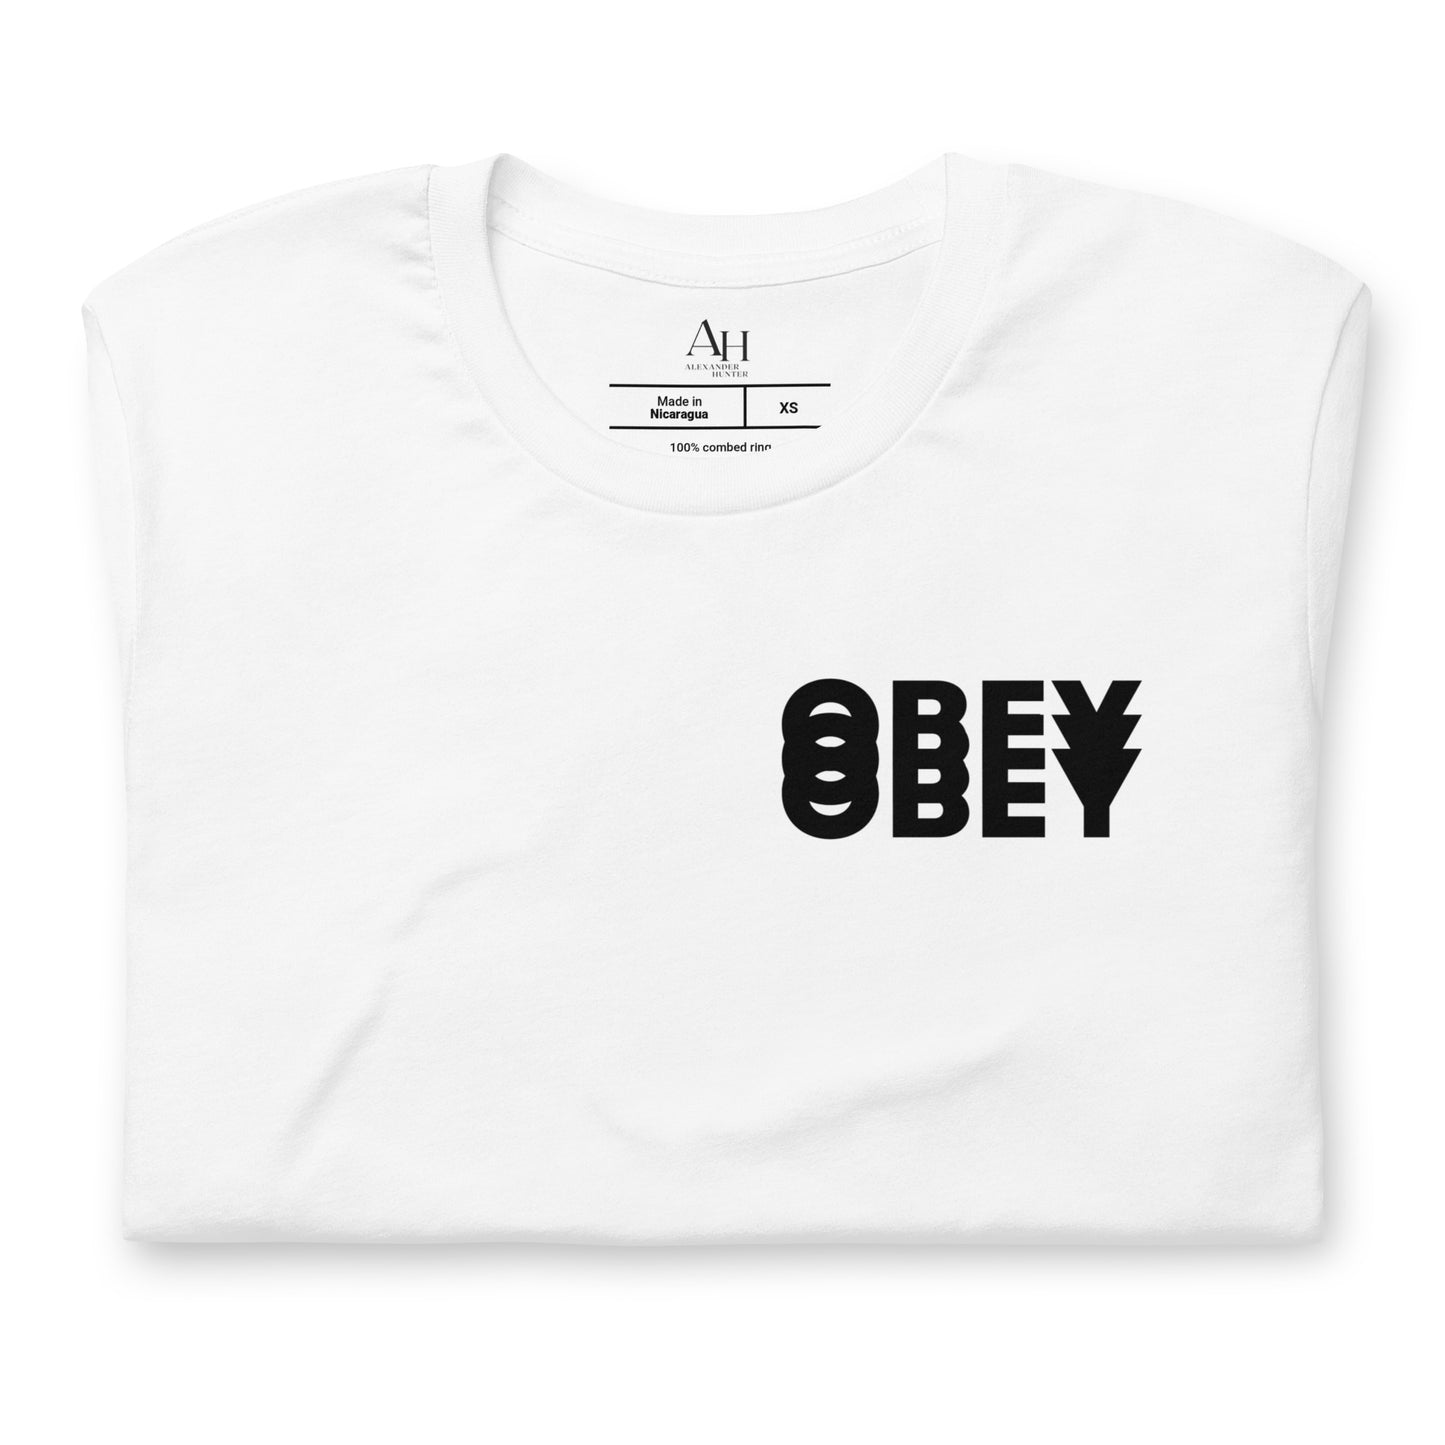 Unisex Obey T-Shirt